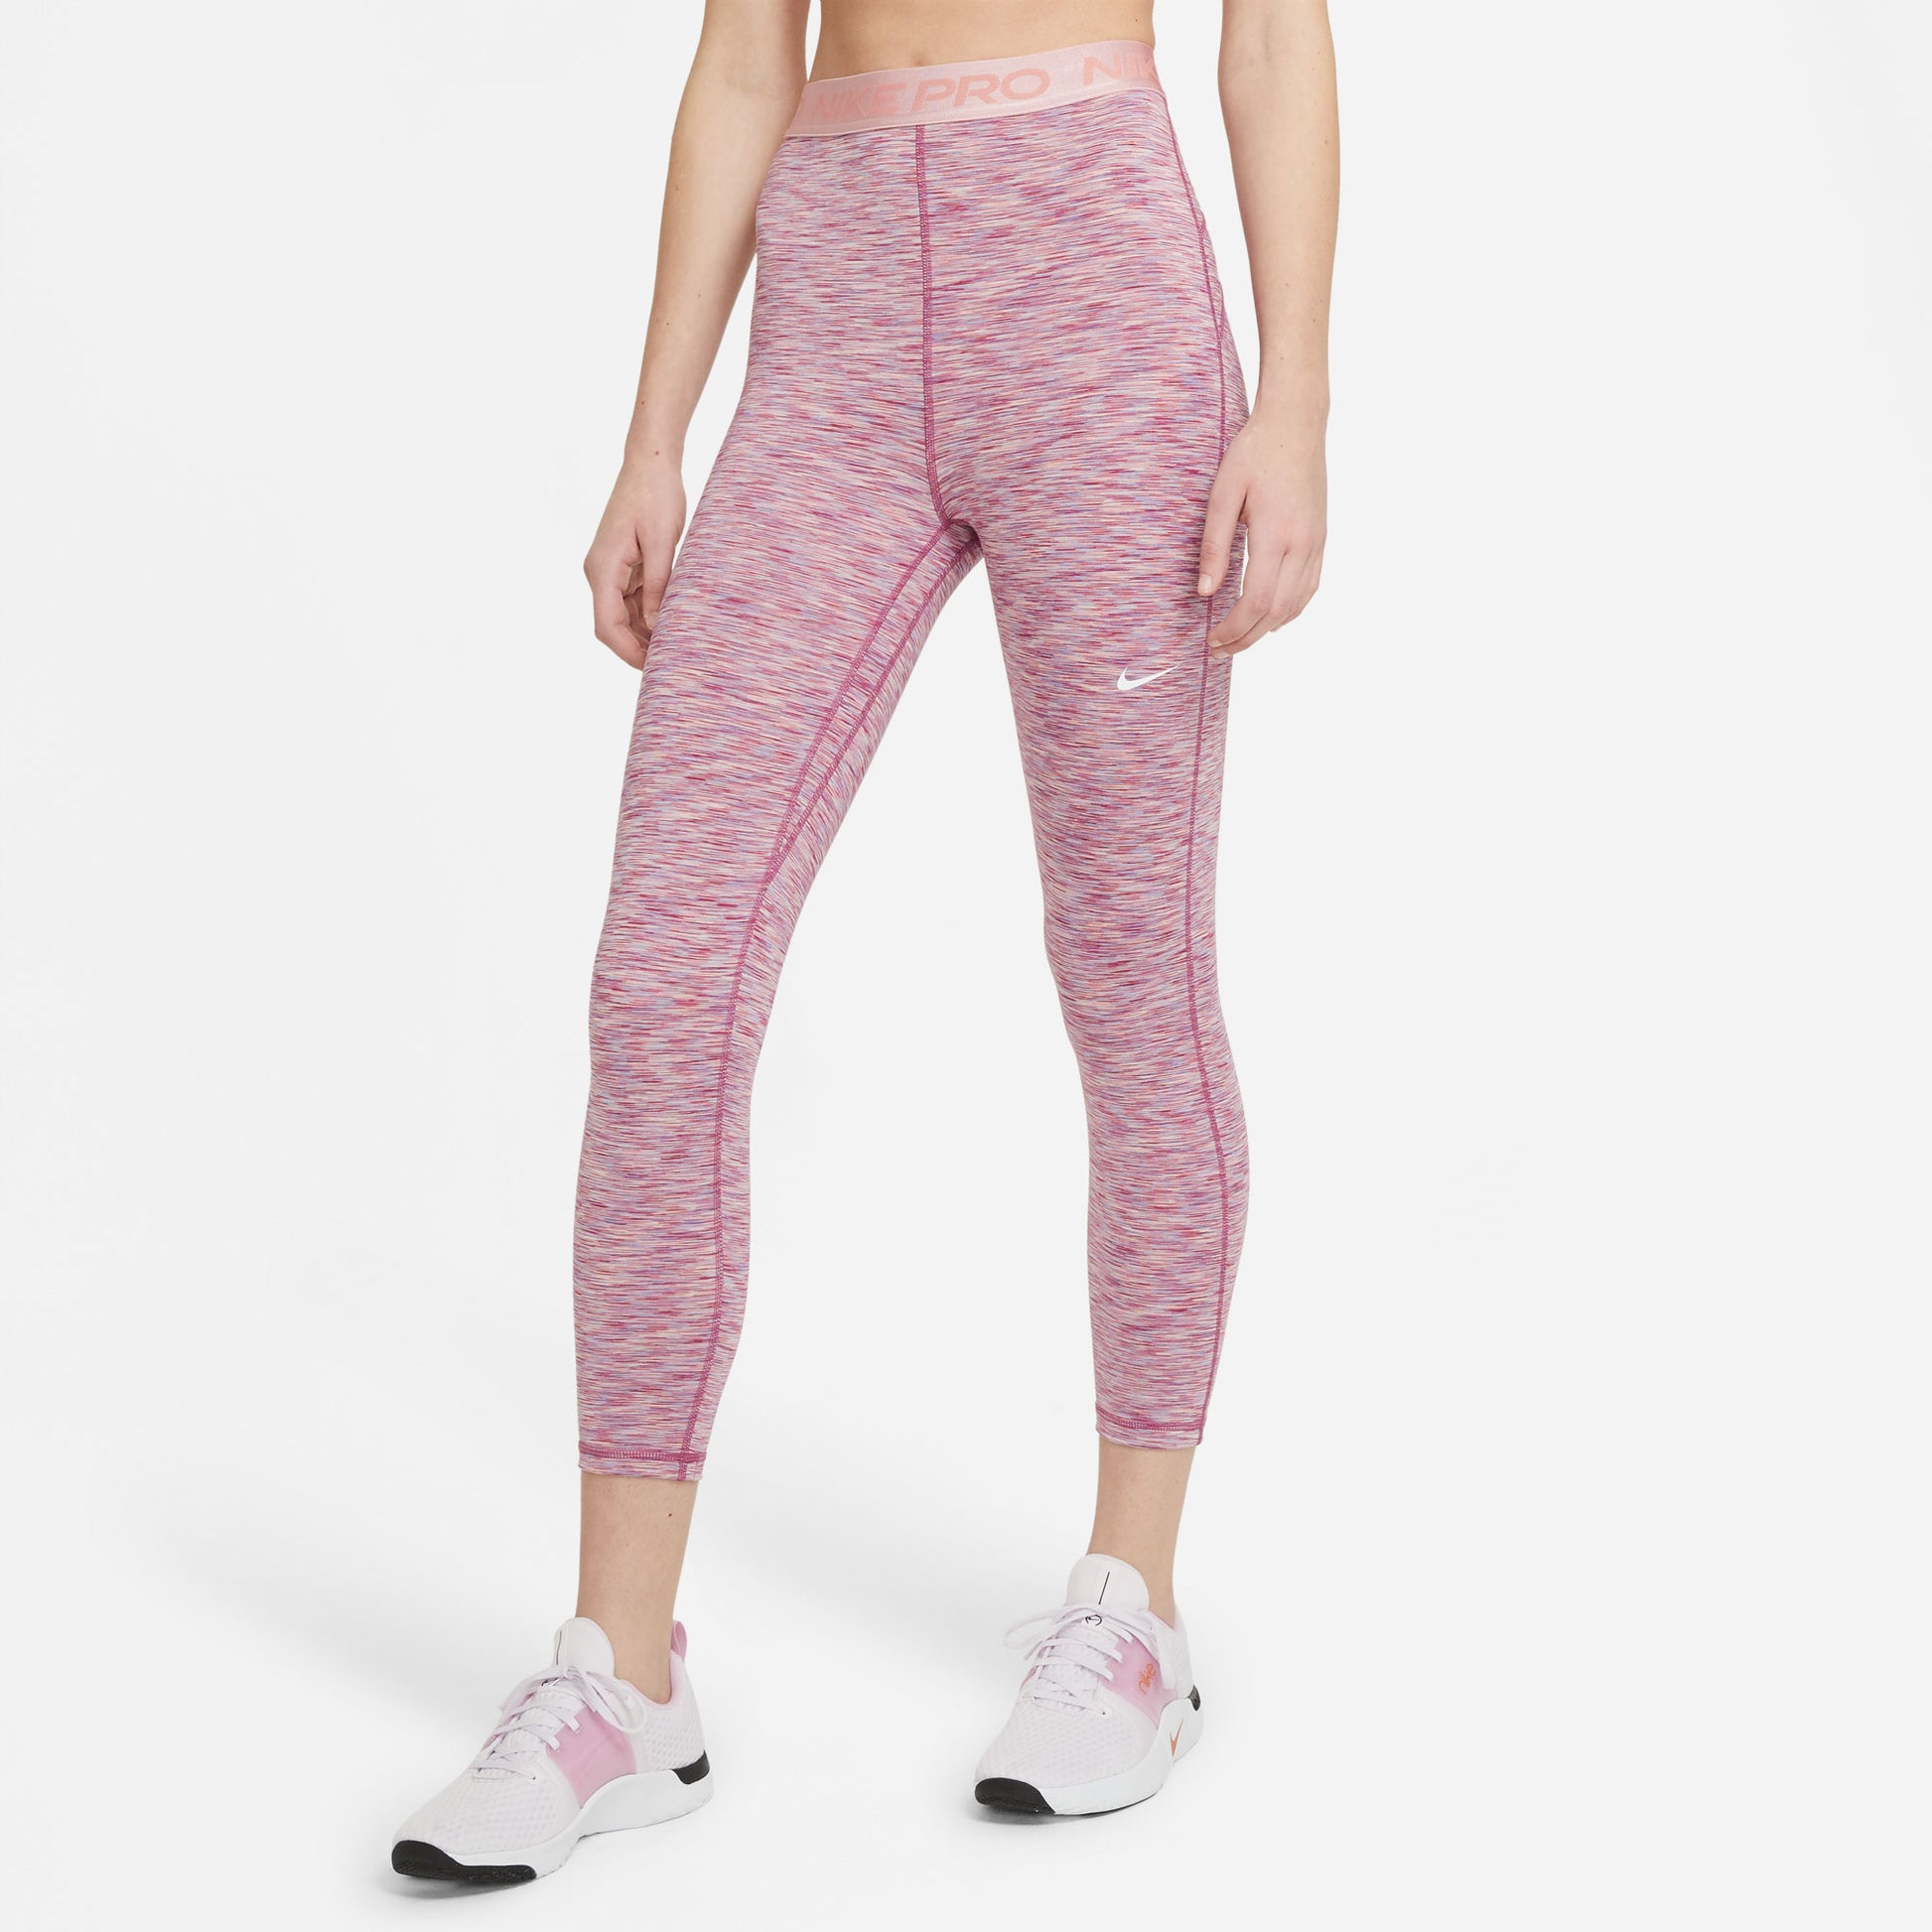 Nike Women's Cropped Space-Dye Tights Pink (1)